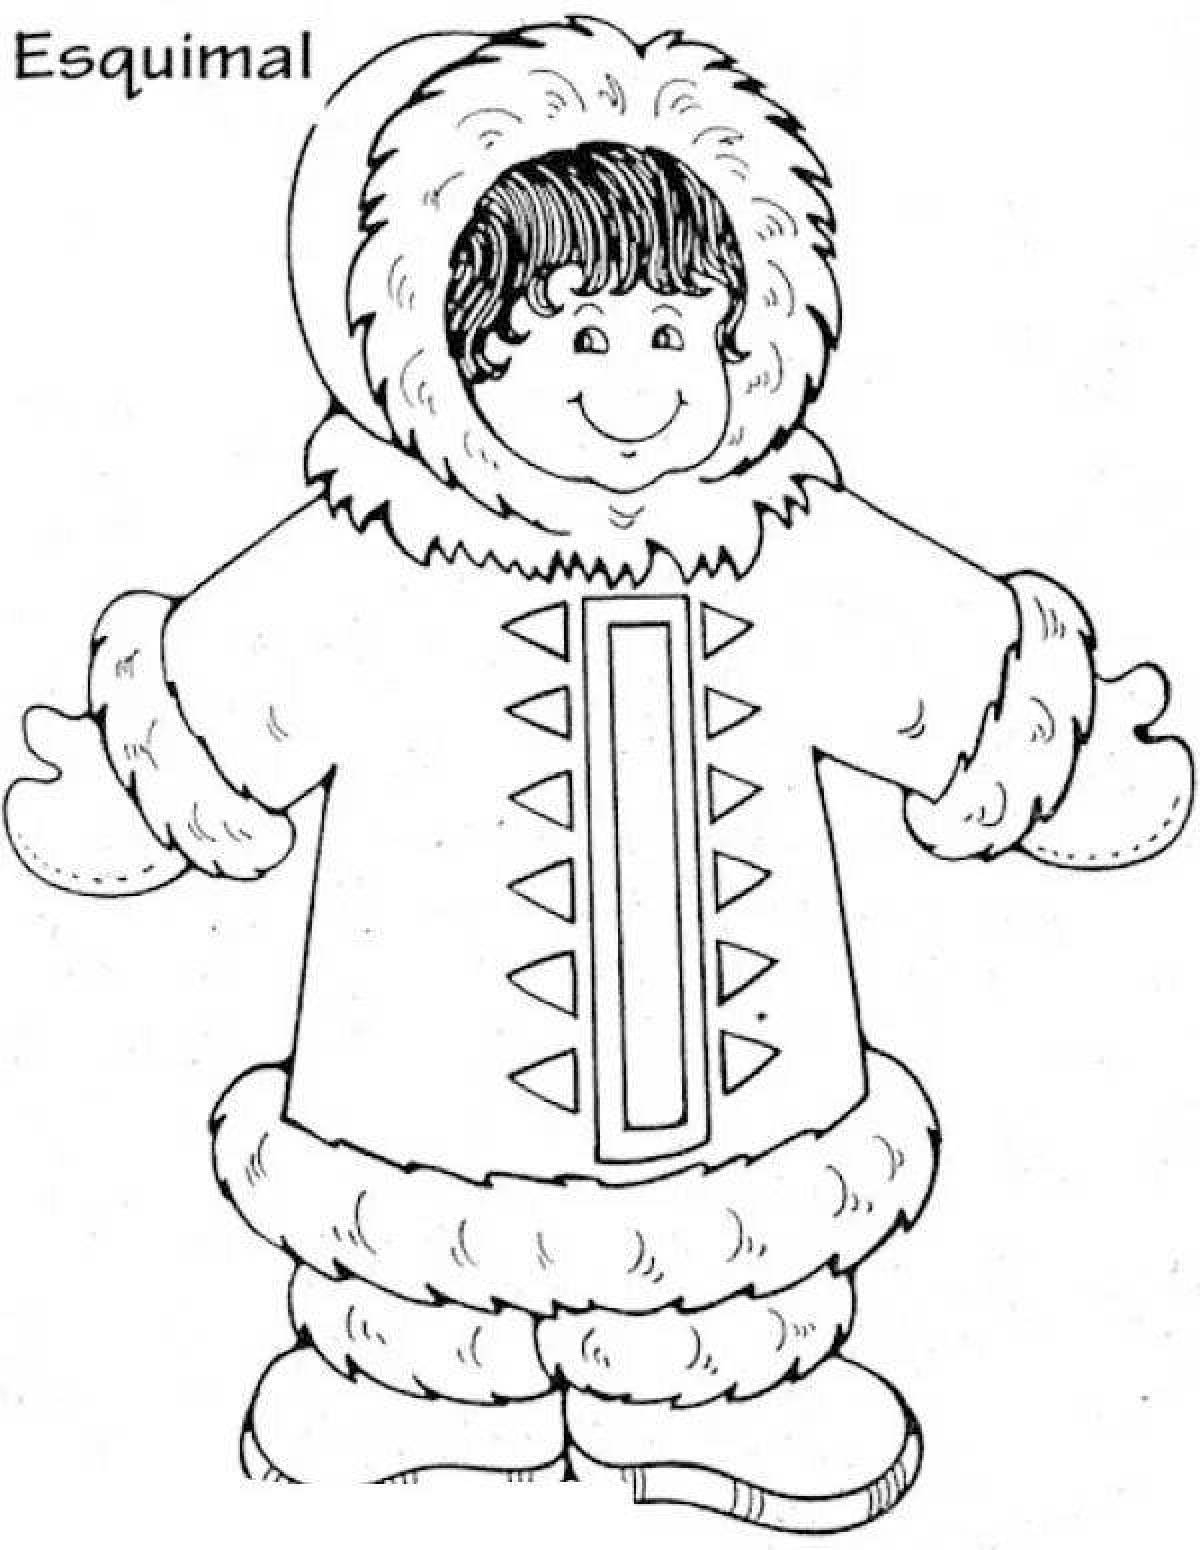 Coloring page cheerful eskimo